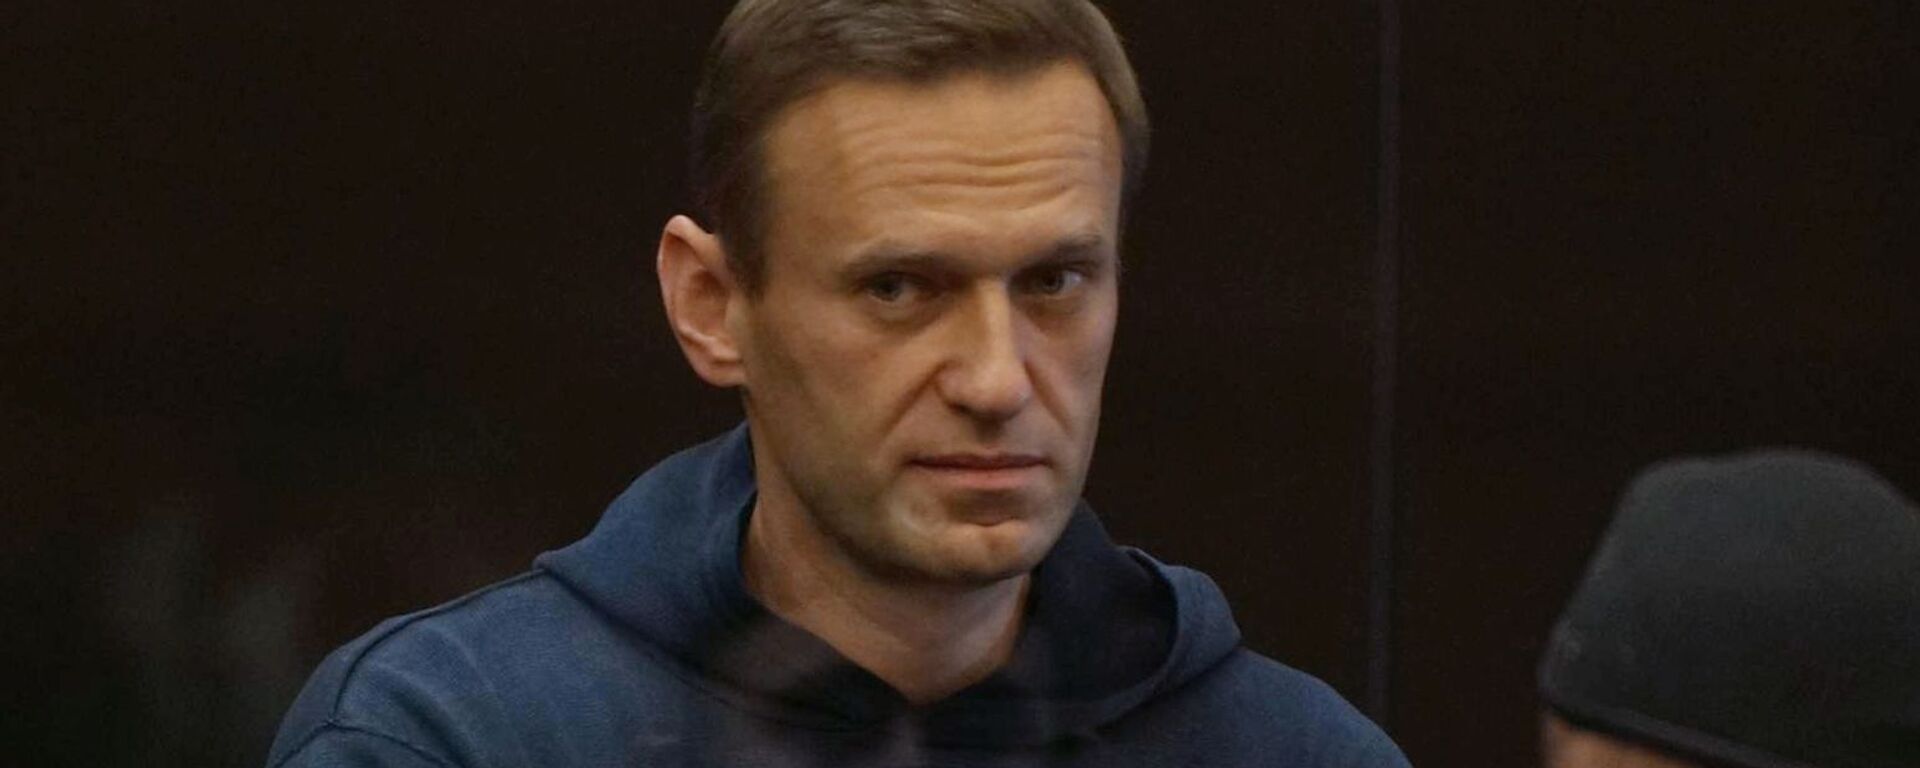 Alexéi Navalni, opositor ruso - Sputnik Mundo, 1920, 18.08.2021